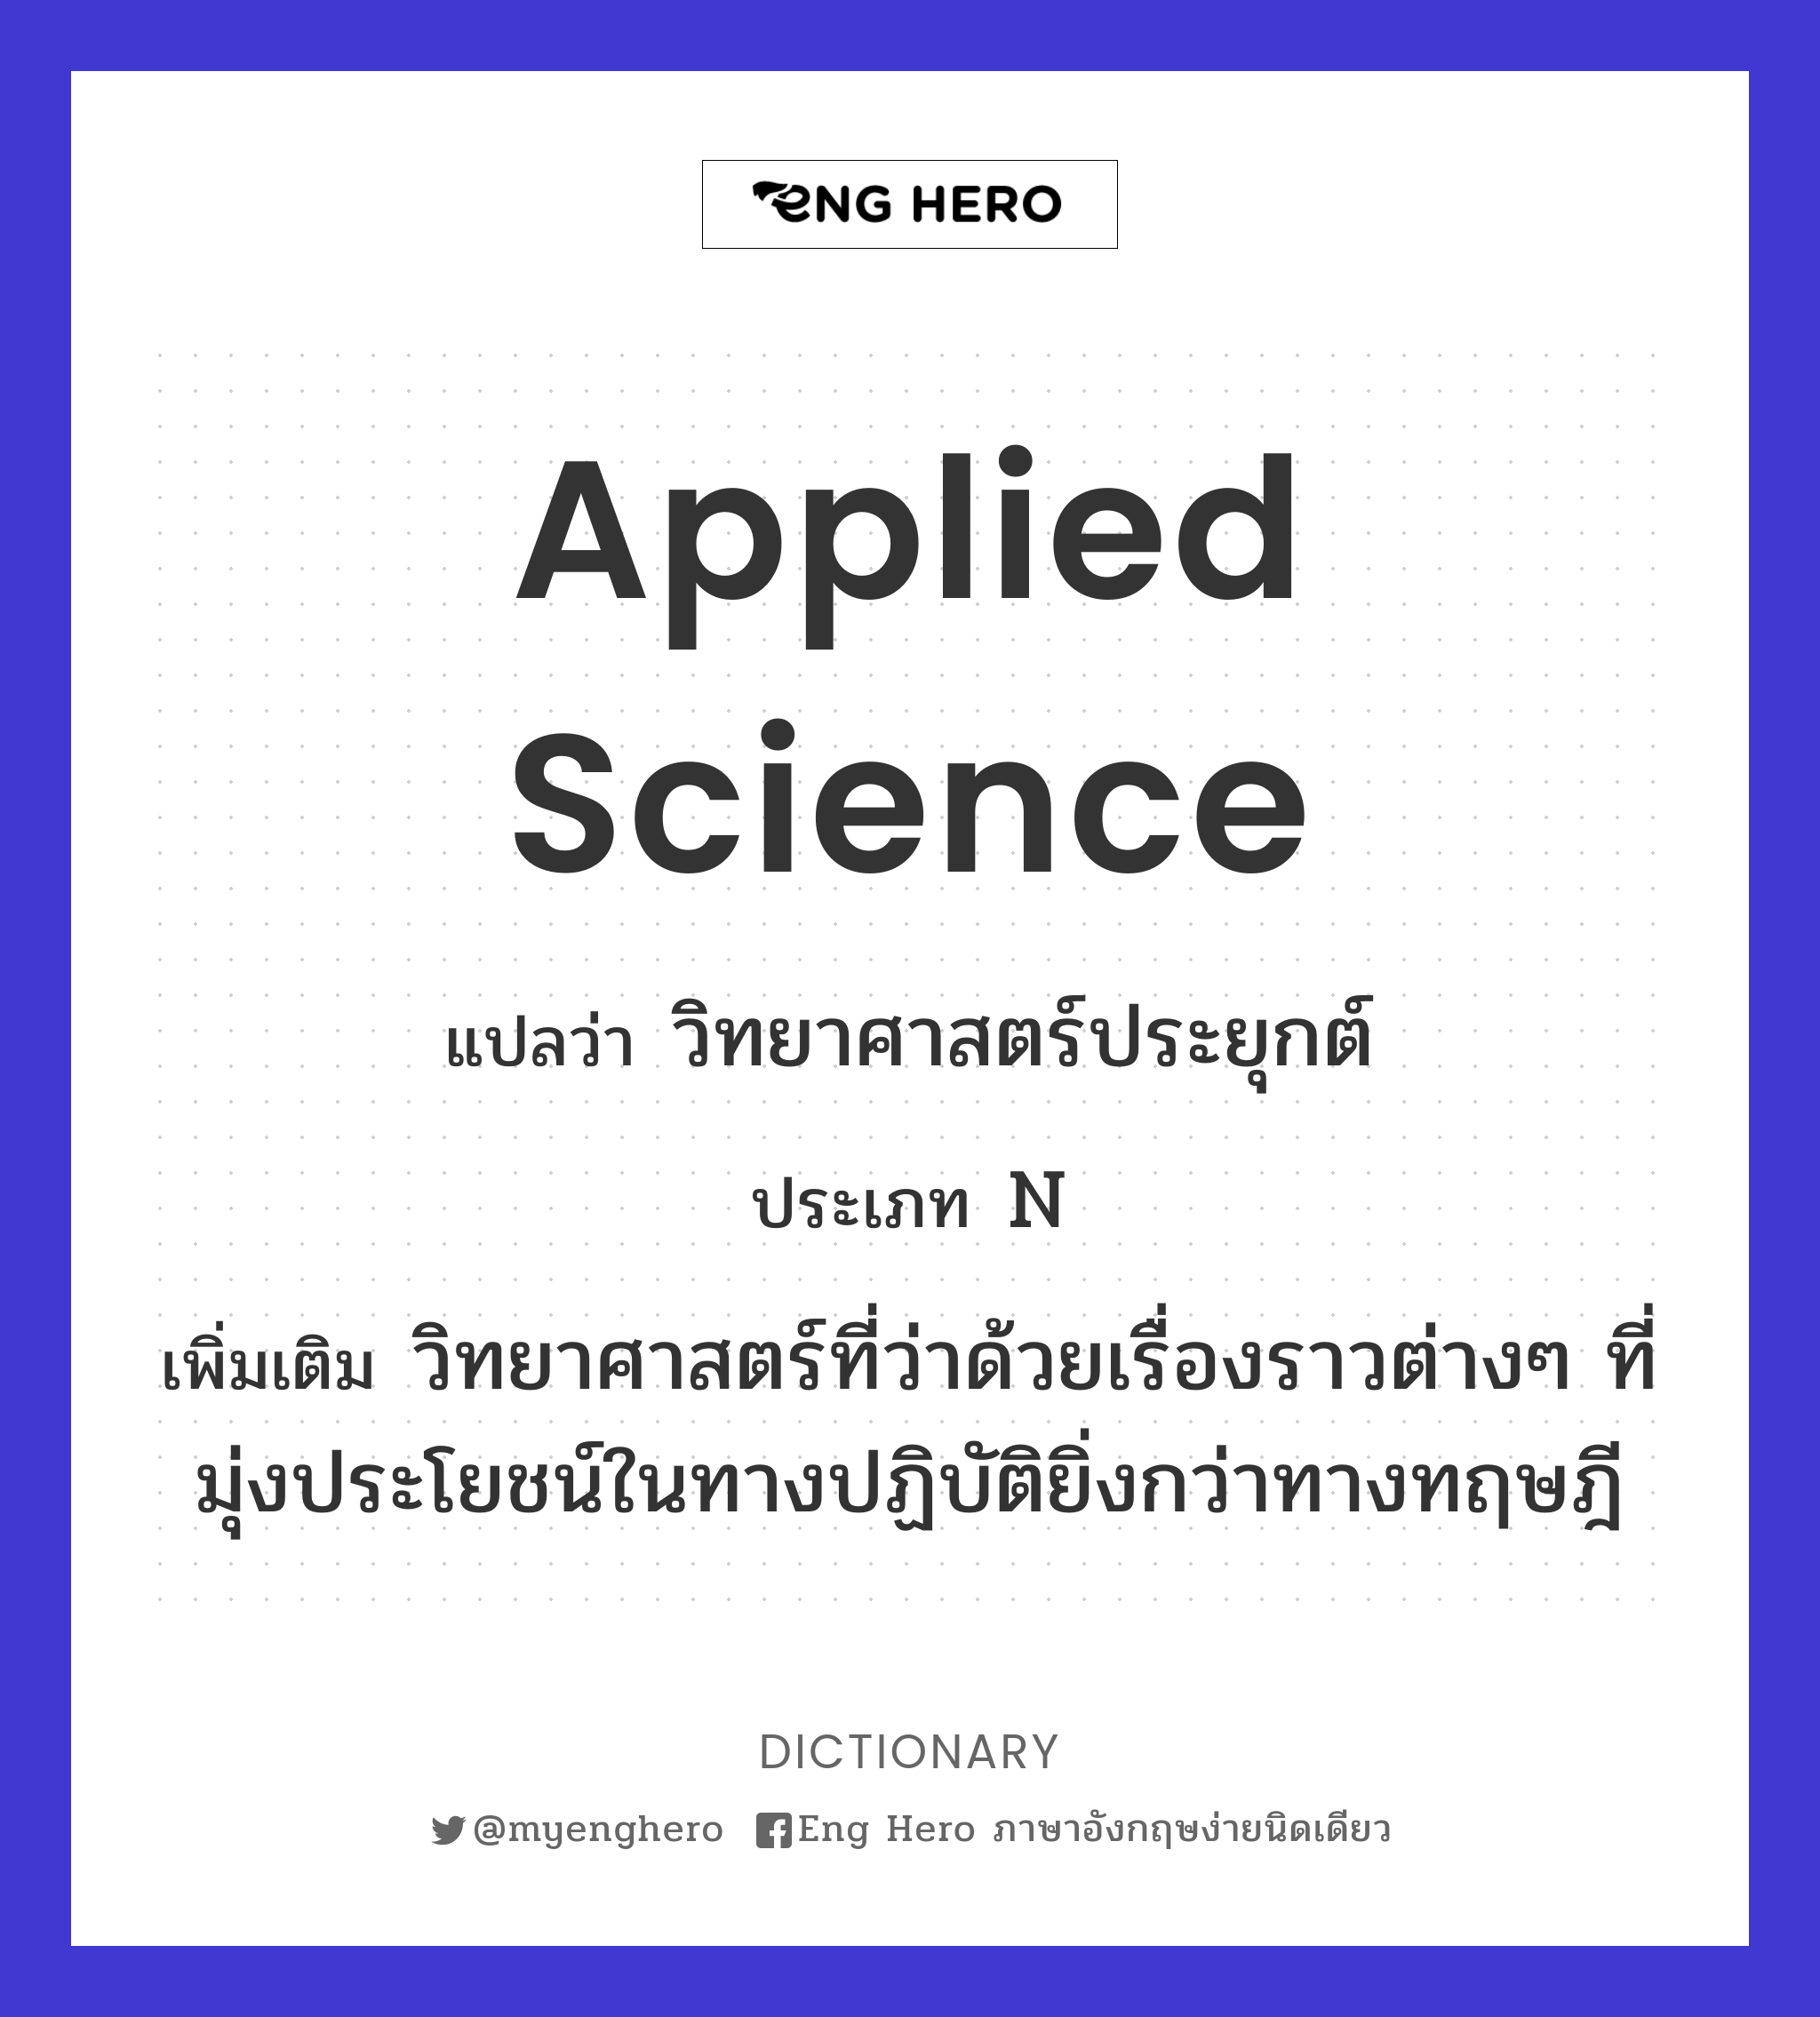 applied science